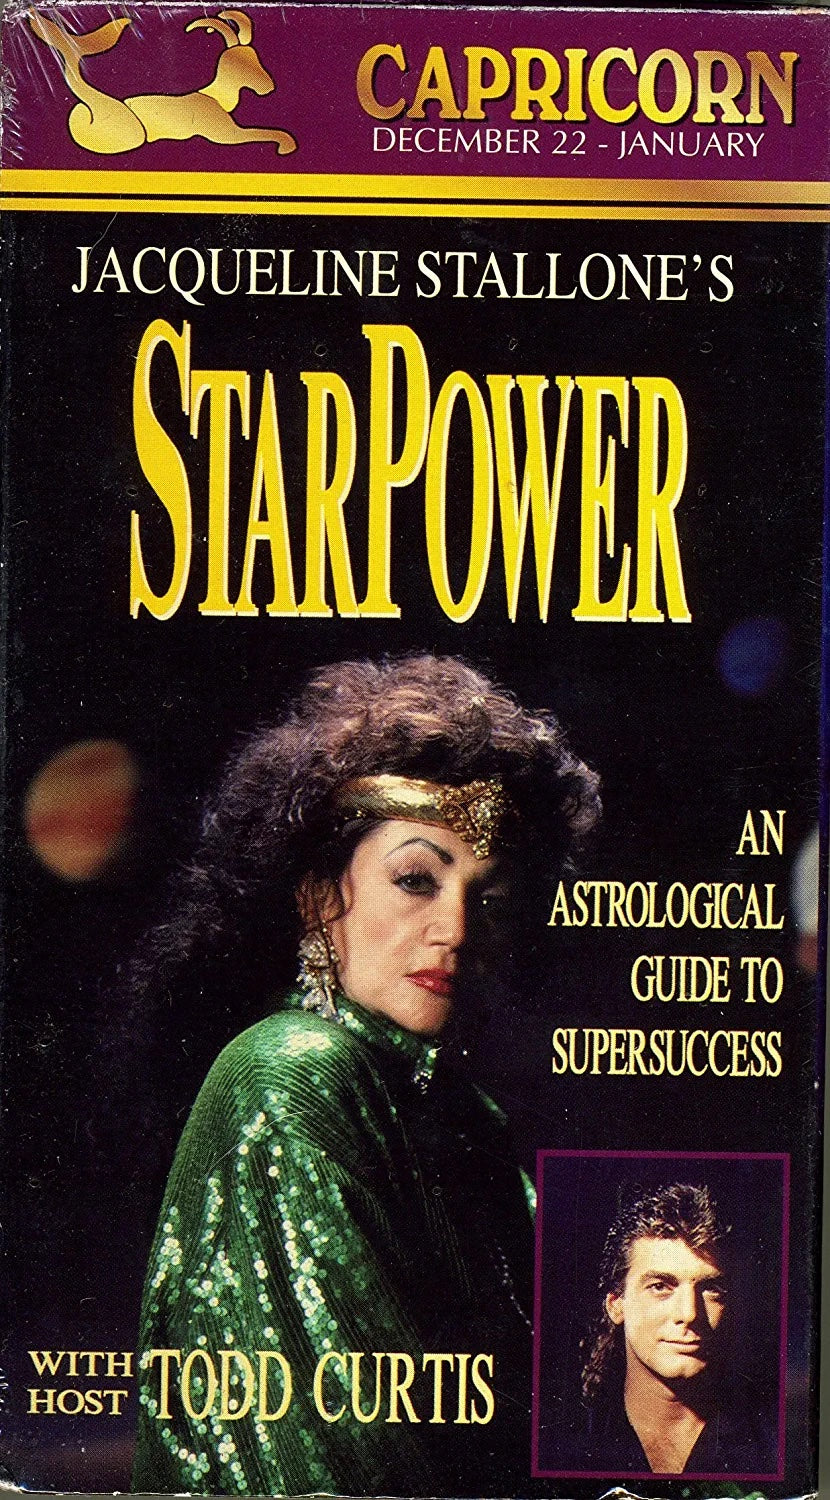 Jacqueline Stallone's Star Power